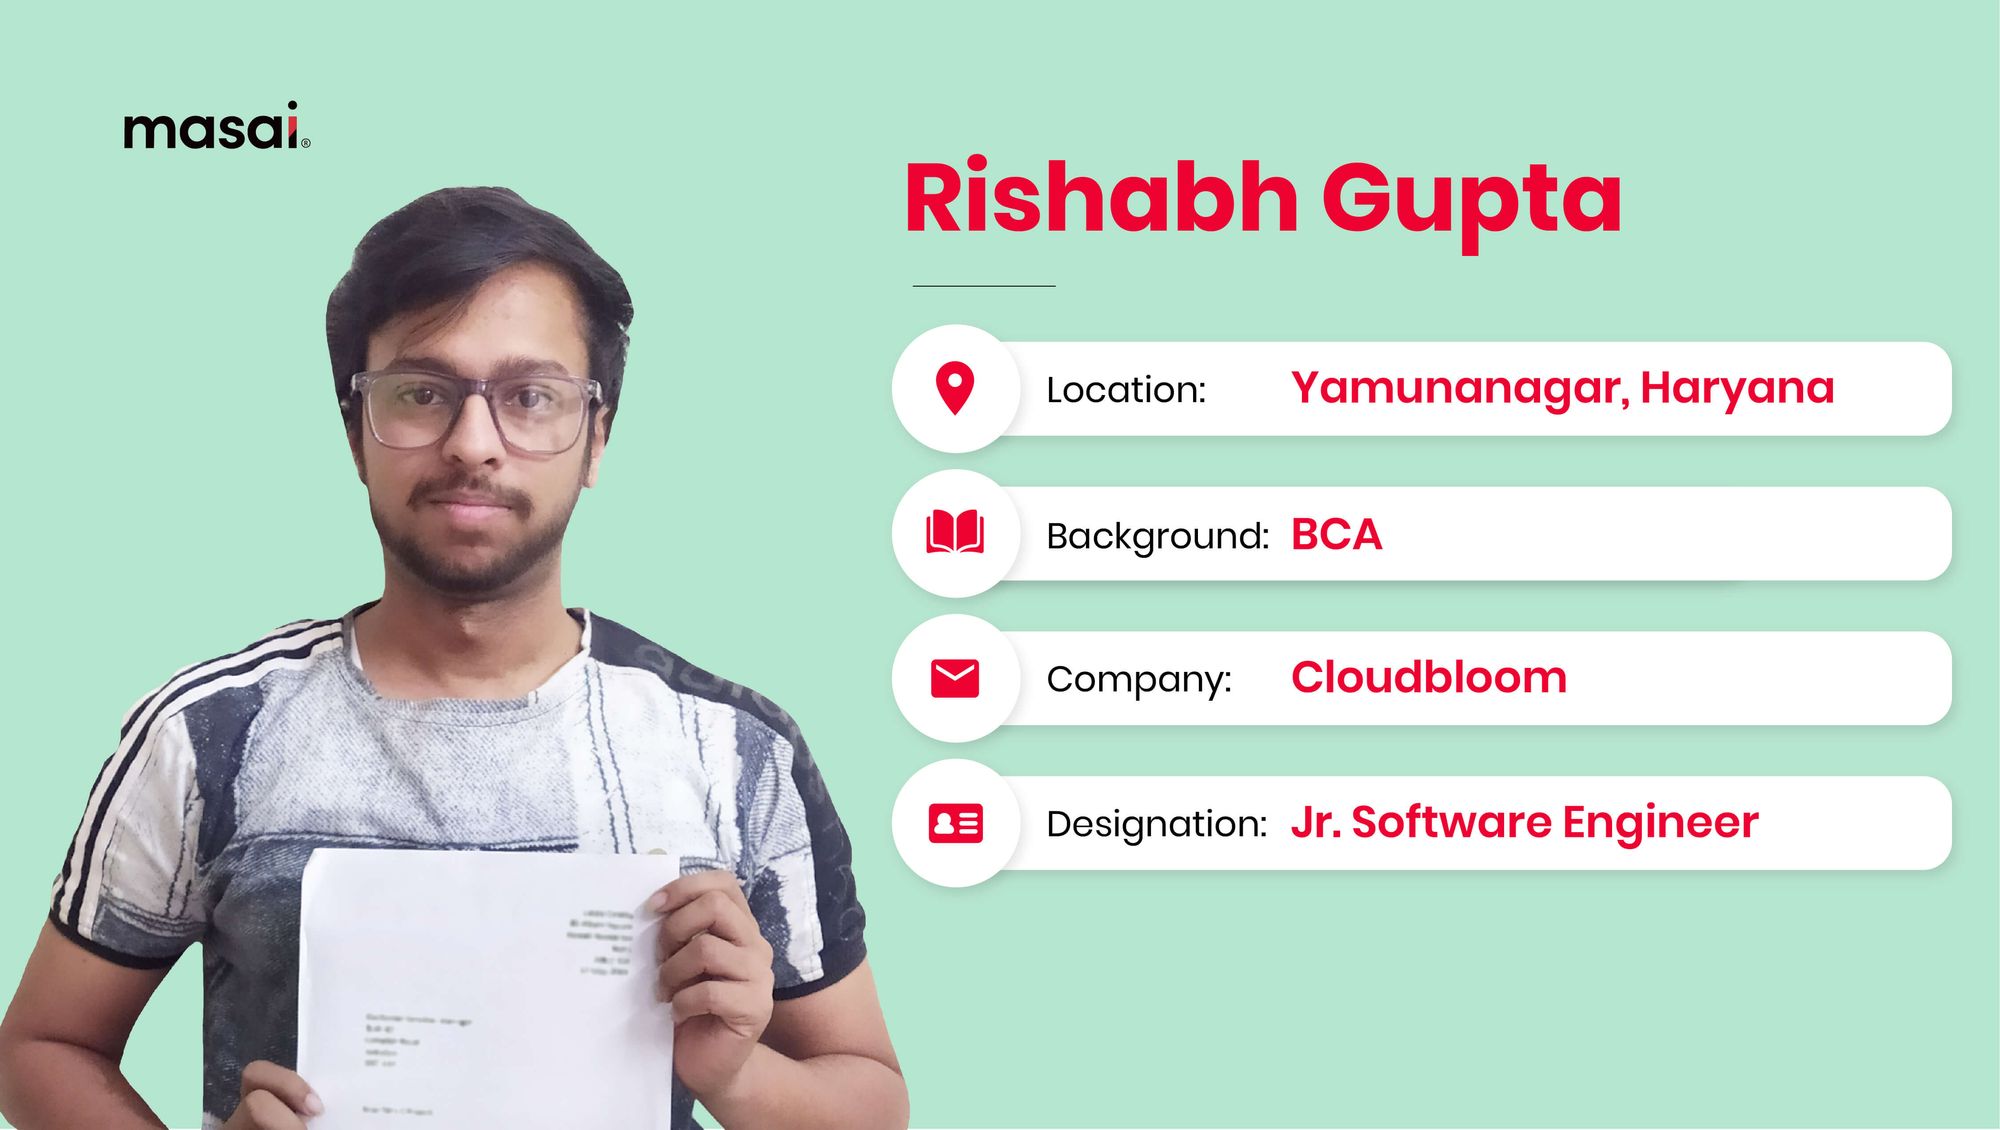 Rishabh Gupta - A Masai graduate now working at Cloudbloom